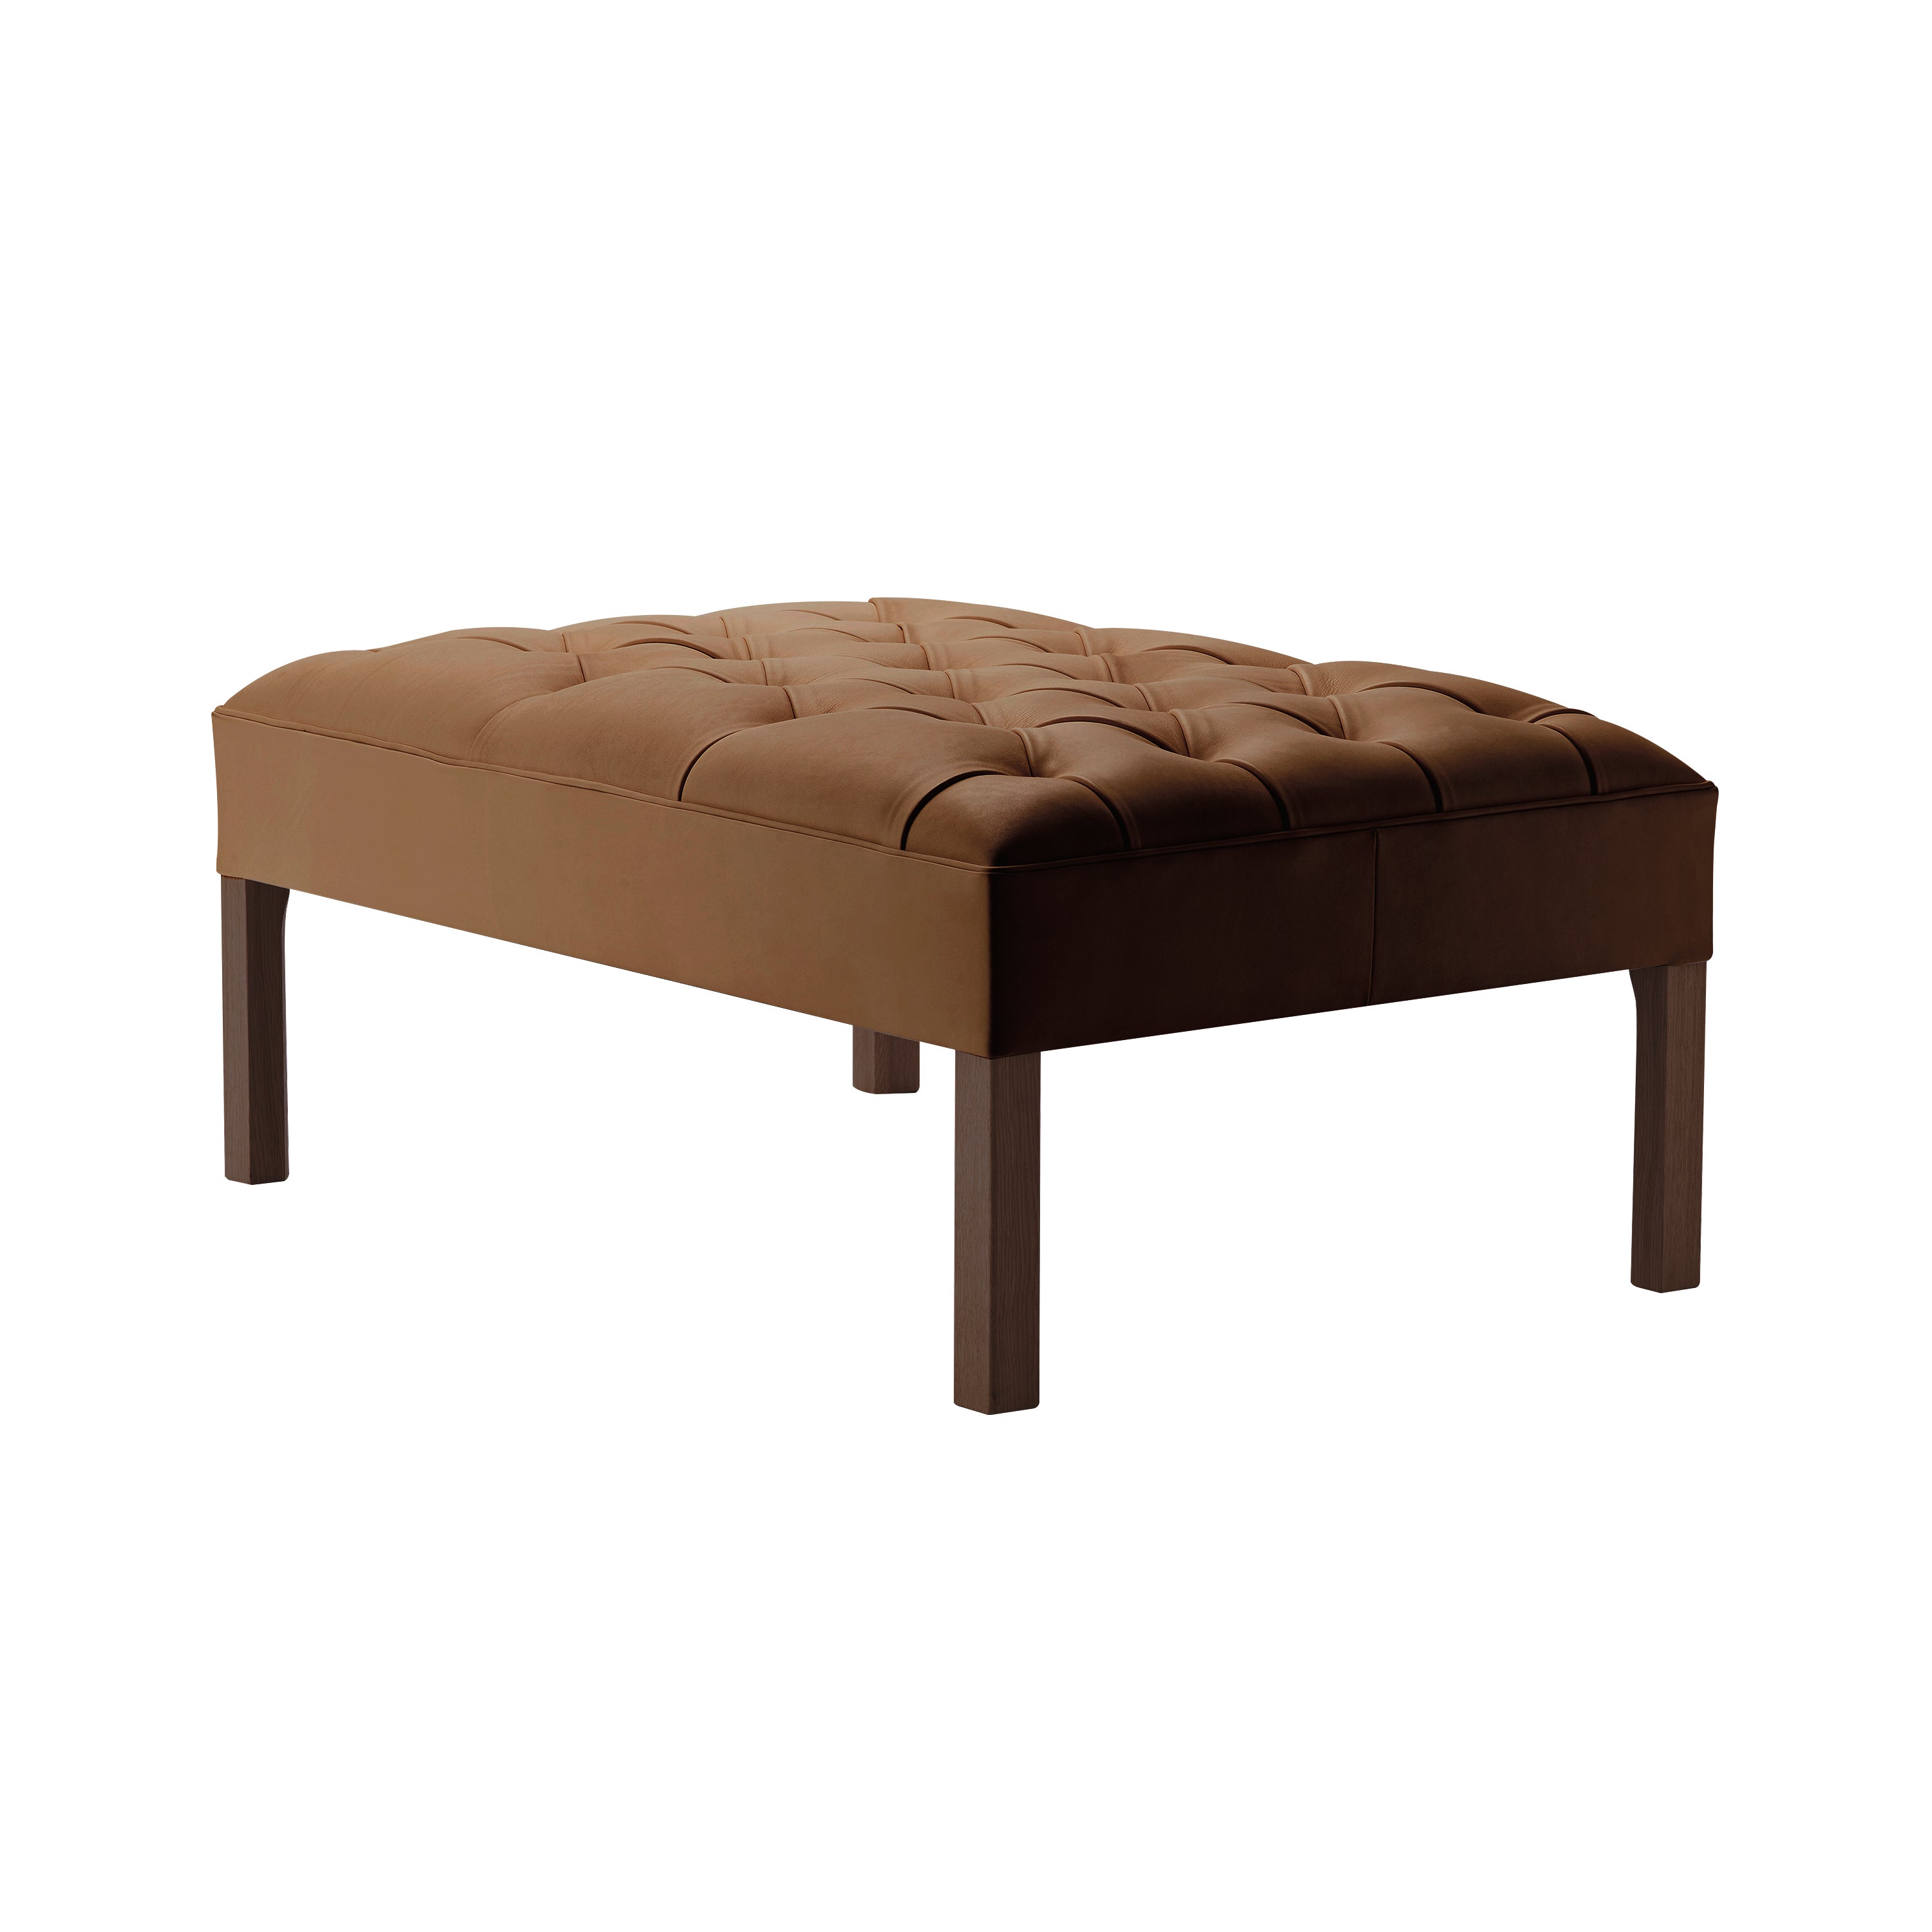 KK48651 Addition Sofa: Oiled Walnut